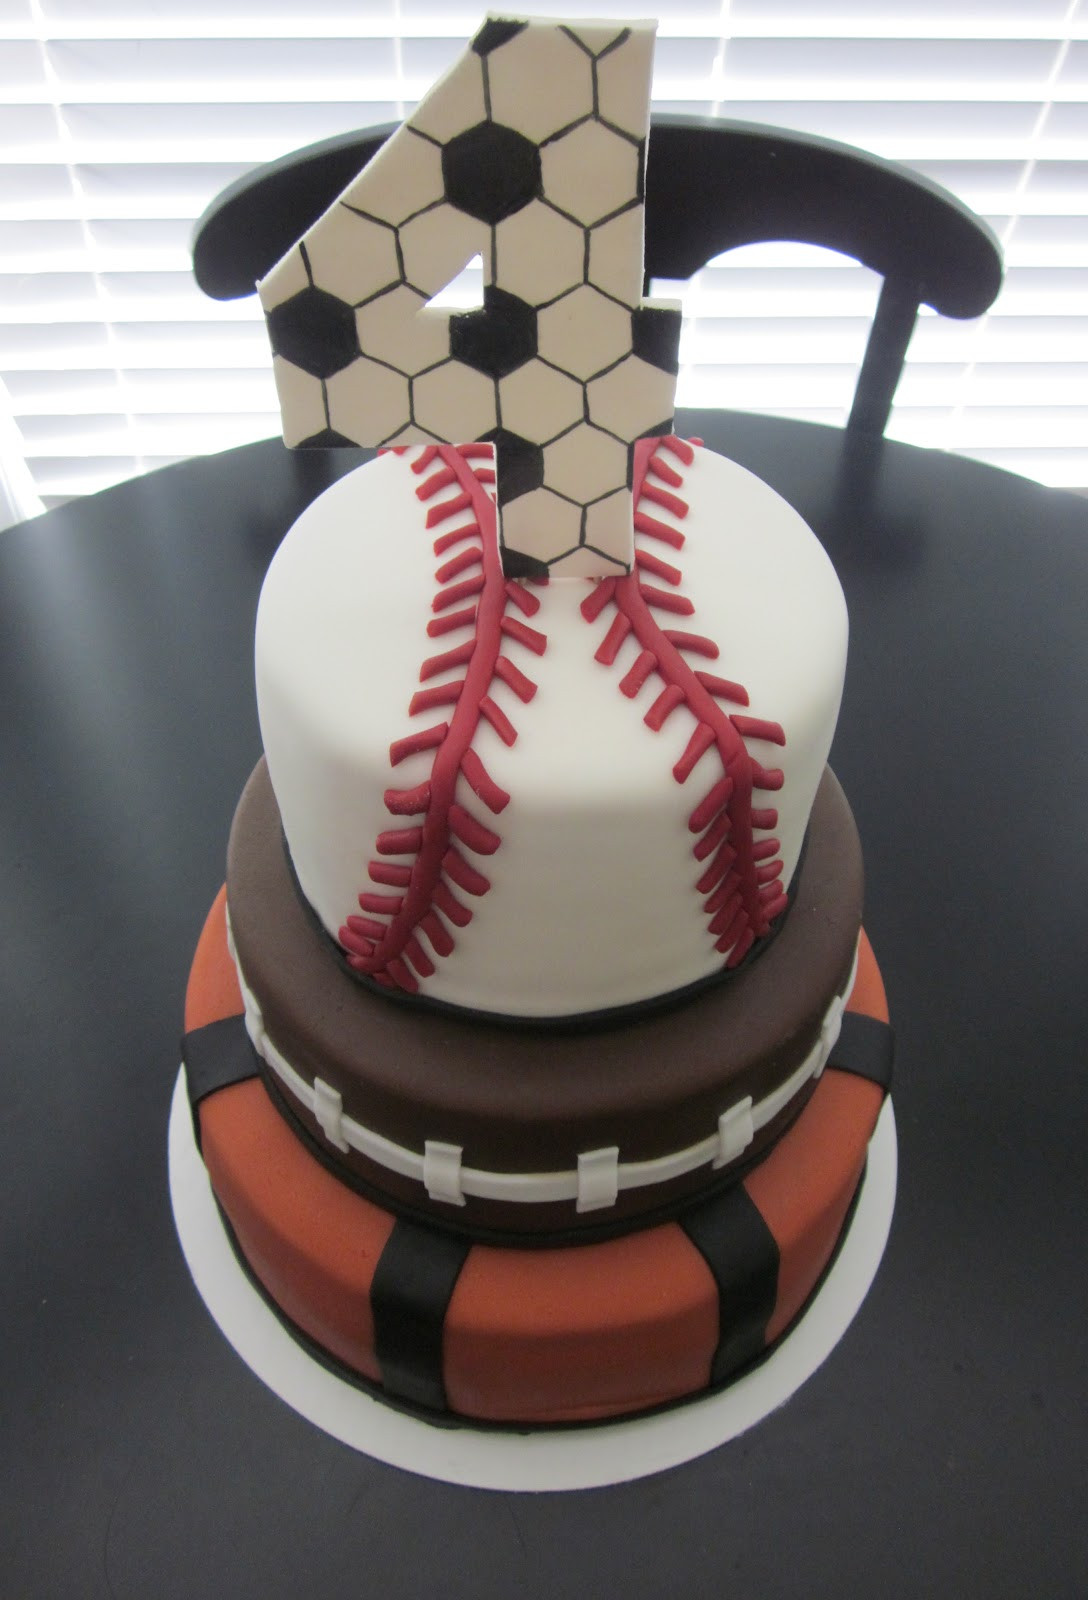 Sports Birthday Cakes
 Darlin Designs Happy Birthday Sport s Cake